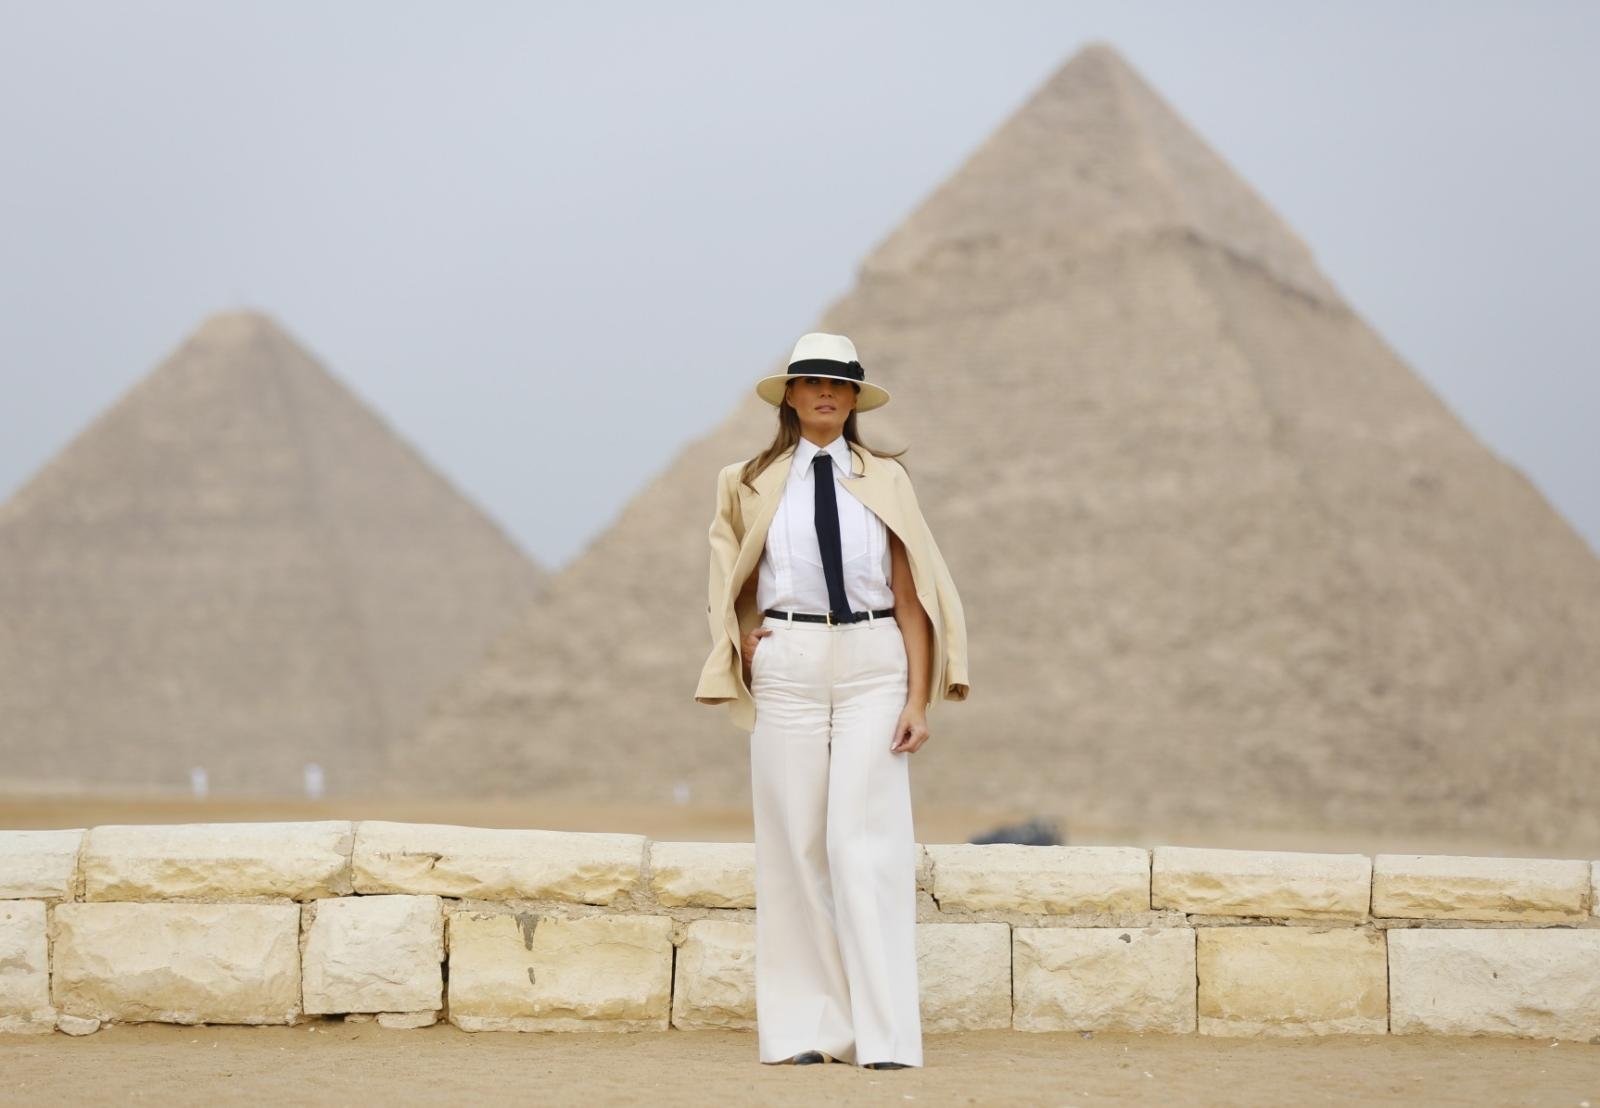 Melania Trump Egipt Vir:Pixell